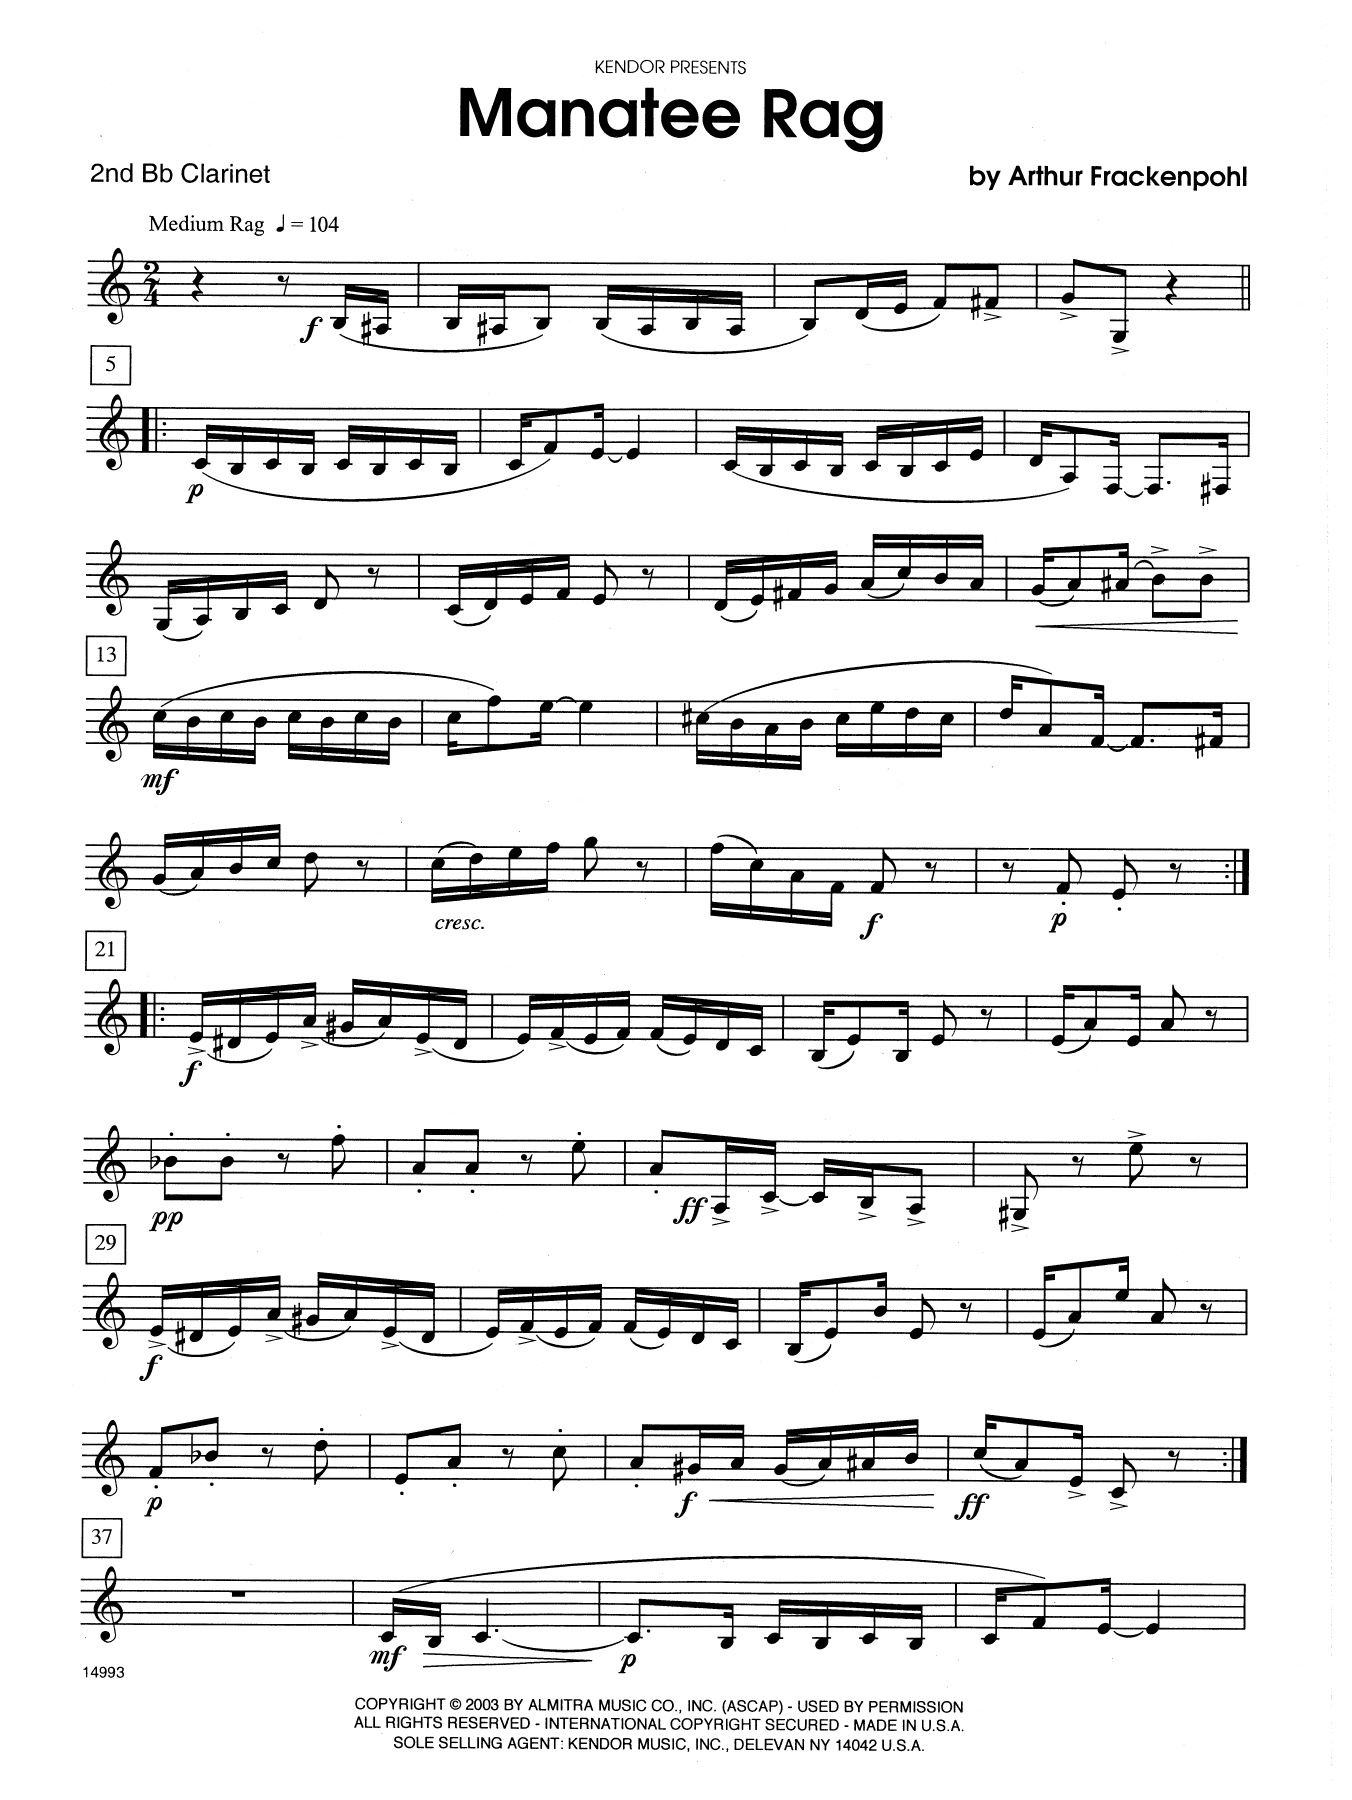 Download Arthur Frackenpohl Manatee Rag - 2nd Bb Clarinet Sheet Music